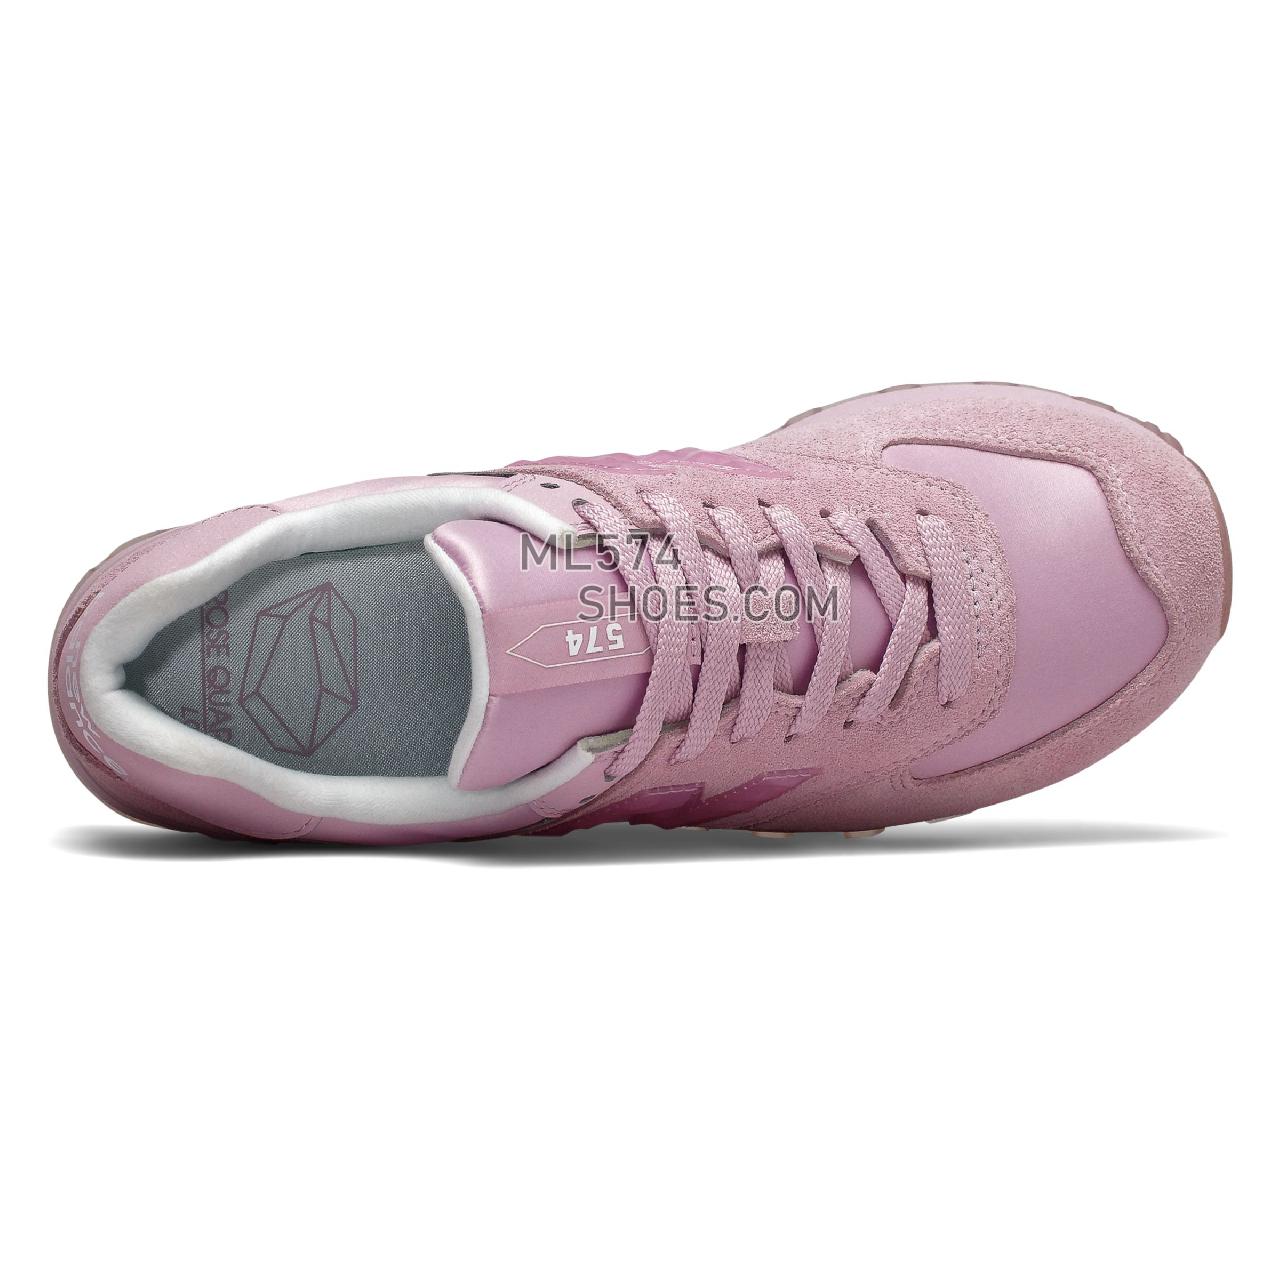 New Balance 574 Mystic Crystal - Women's Classic Sneakers - Oxygen Pink - WL574WNU